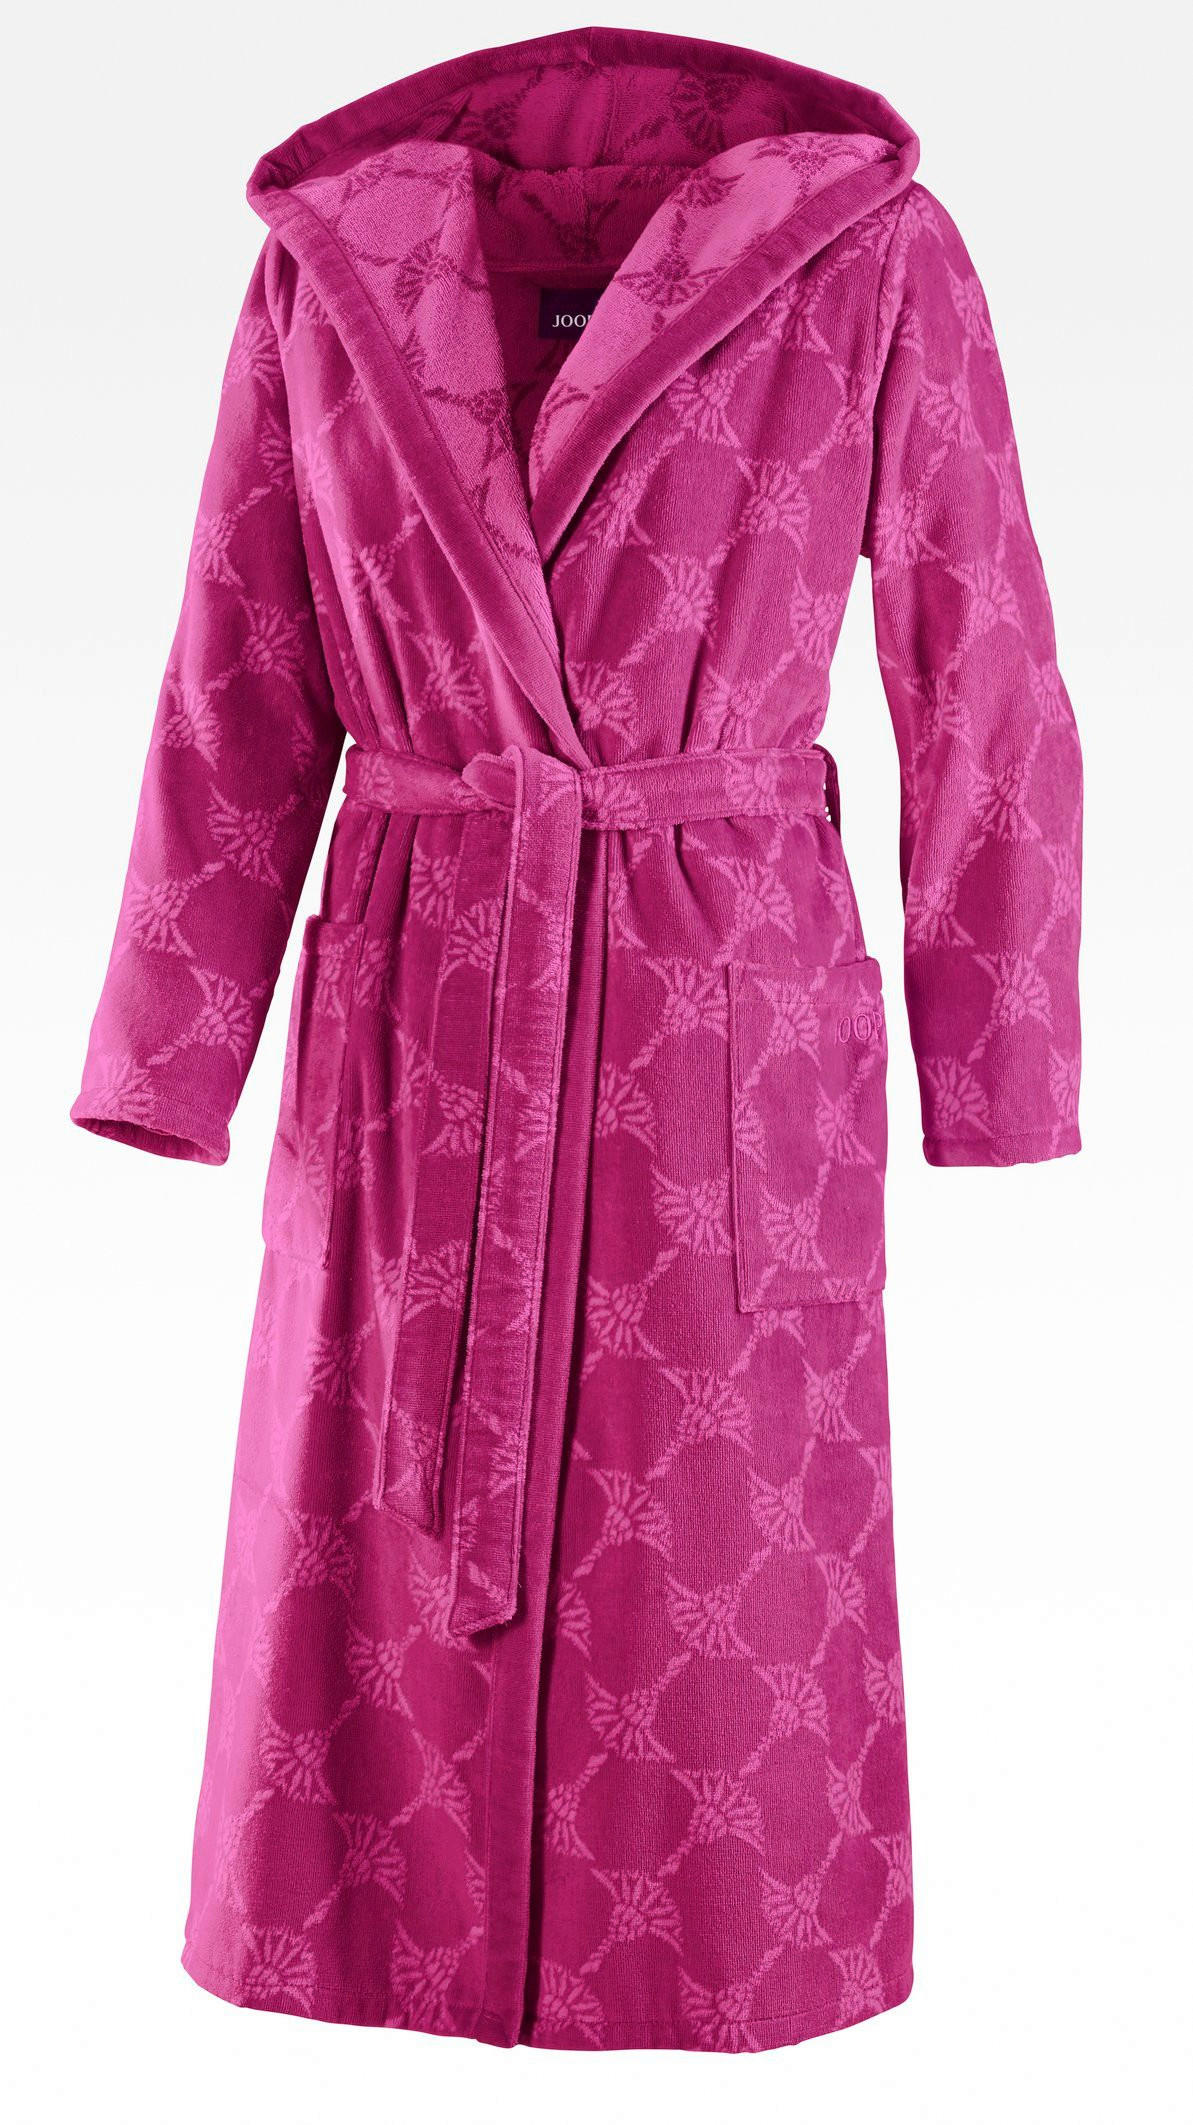 BADEMANTEL  - Pink, Basics, Textil (32/34null) - Joop!